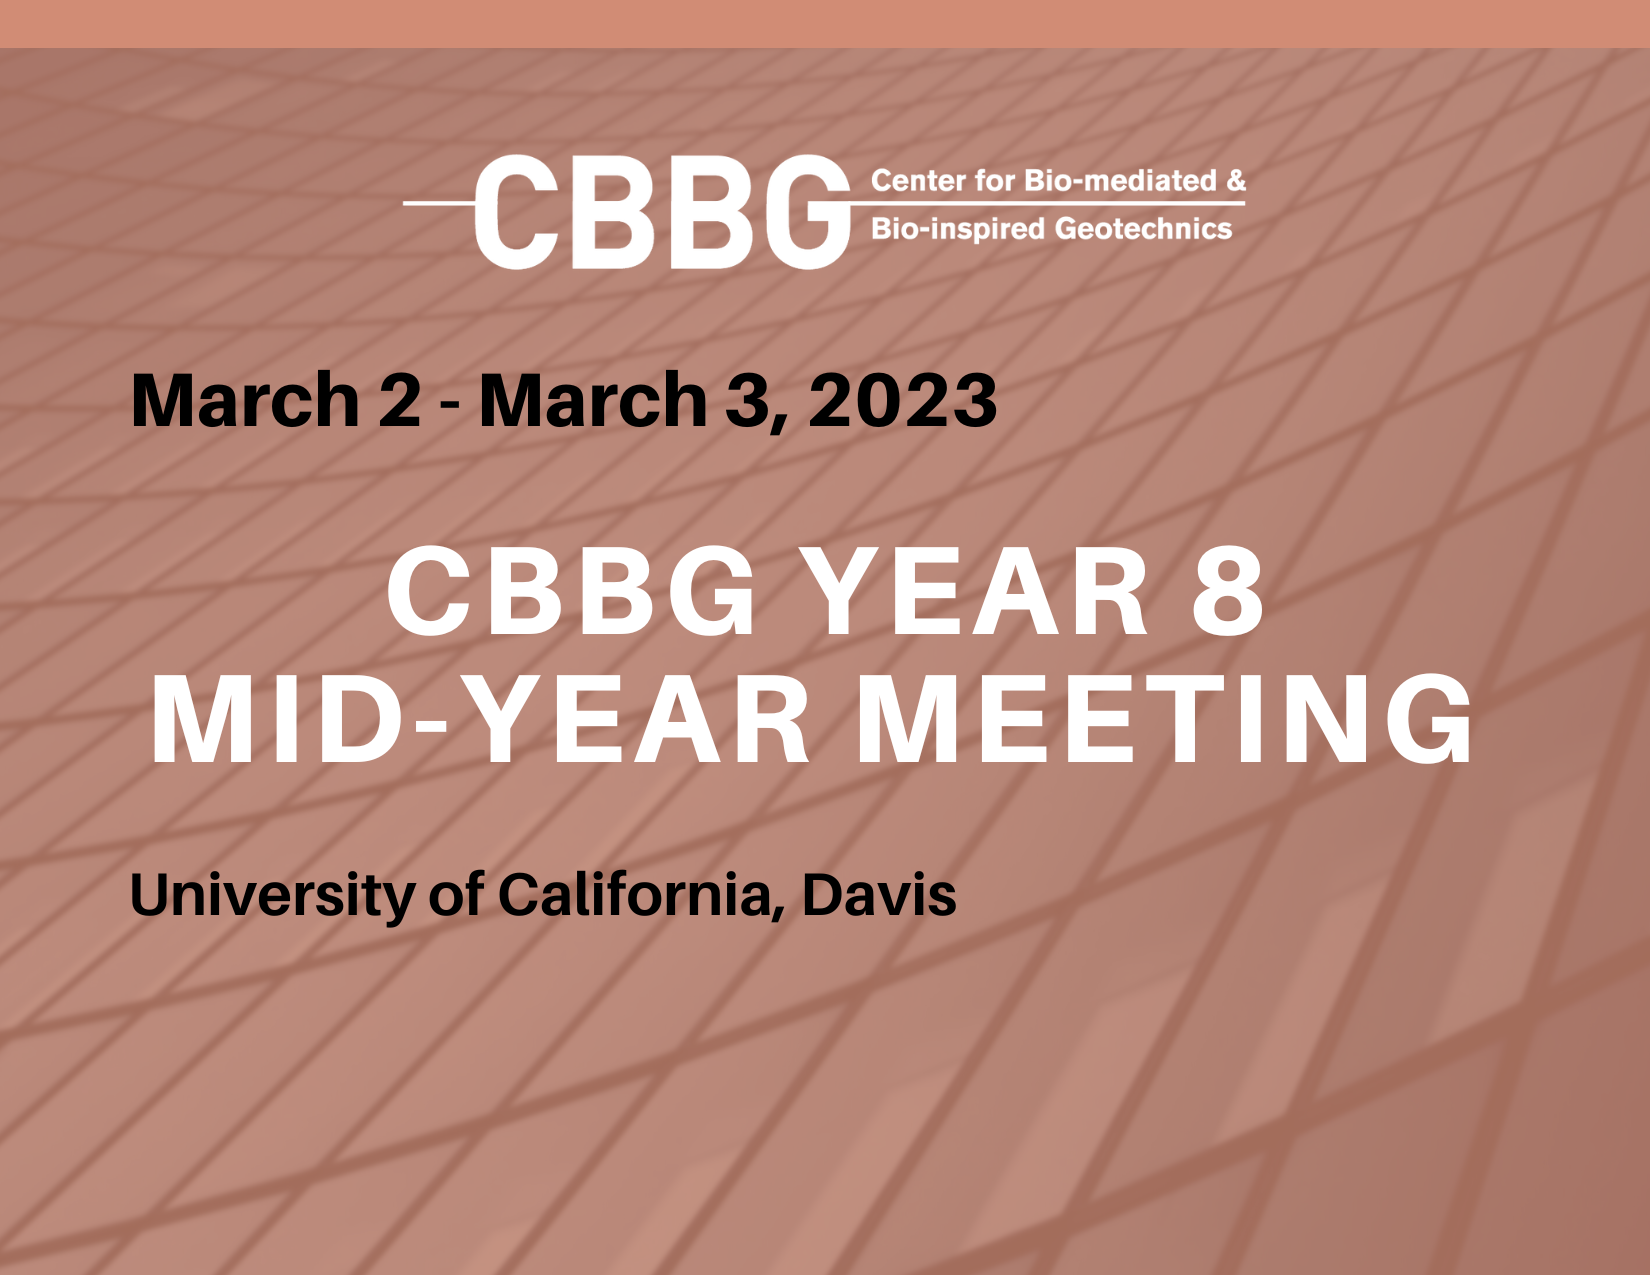 CBBG Year 8 mid-year meeting